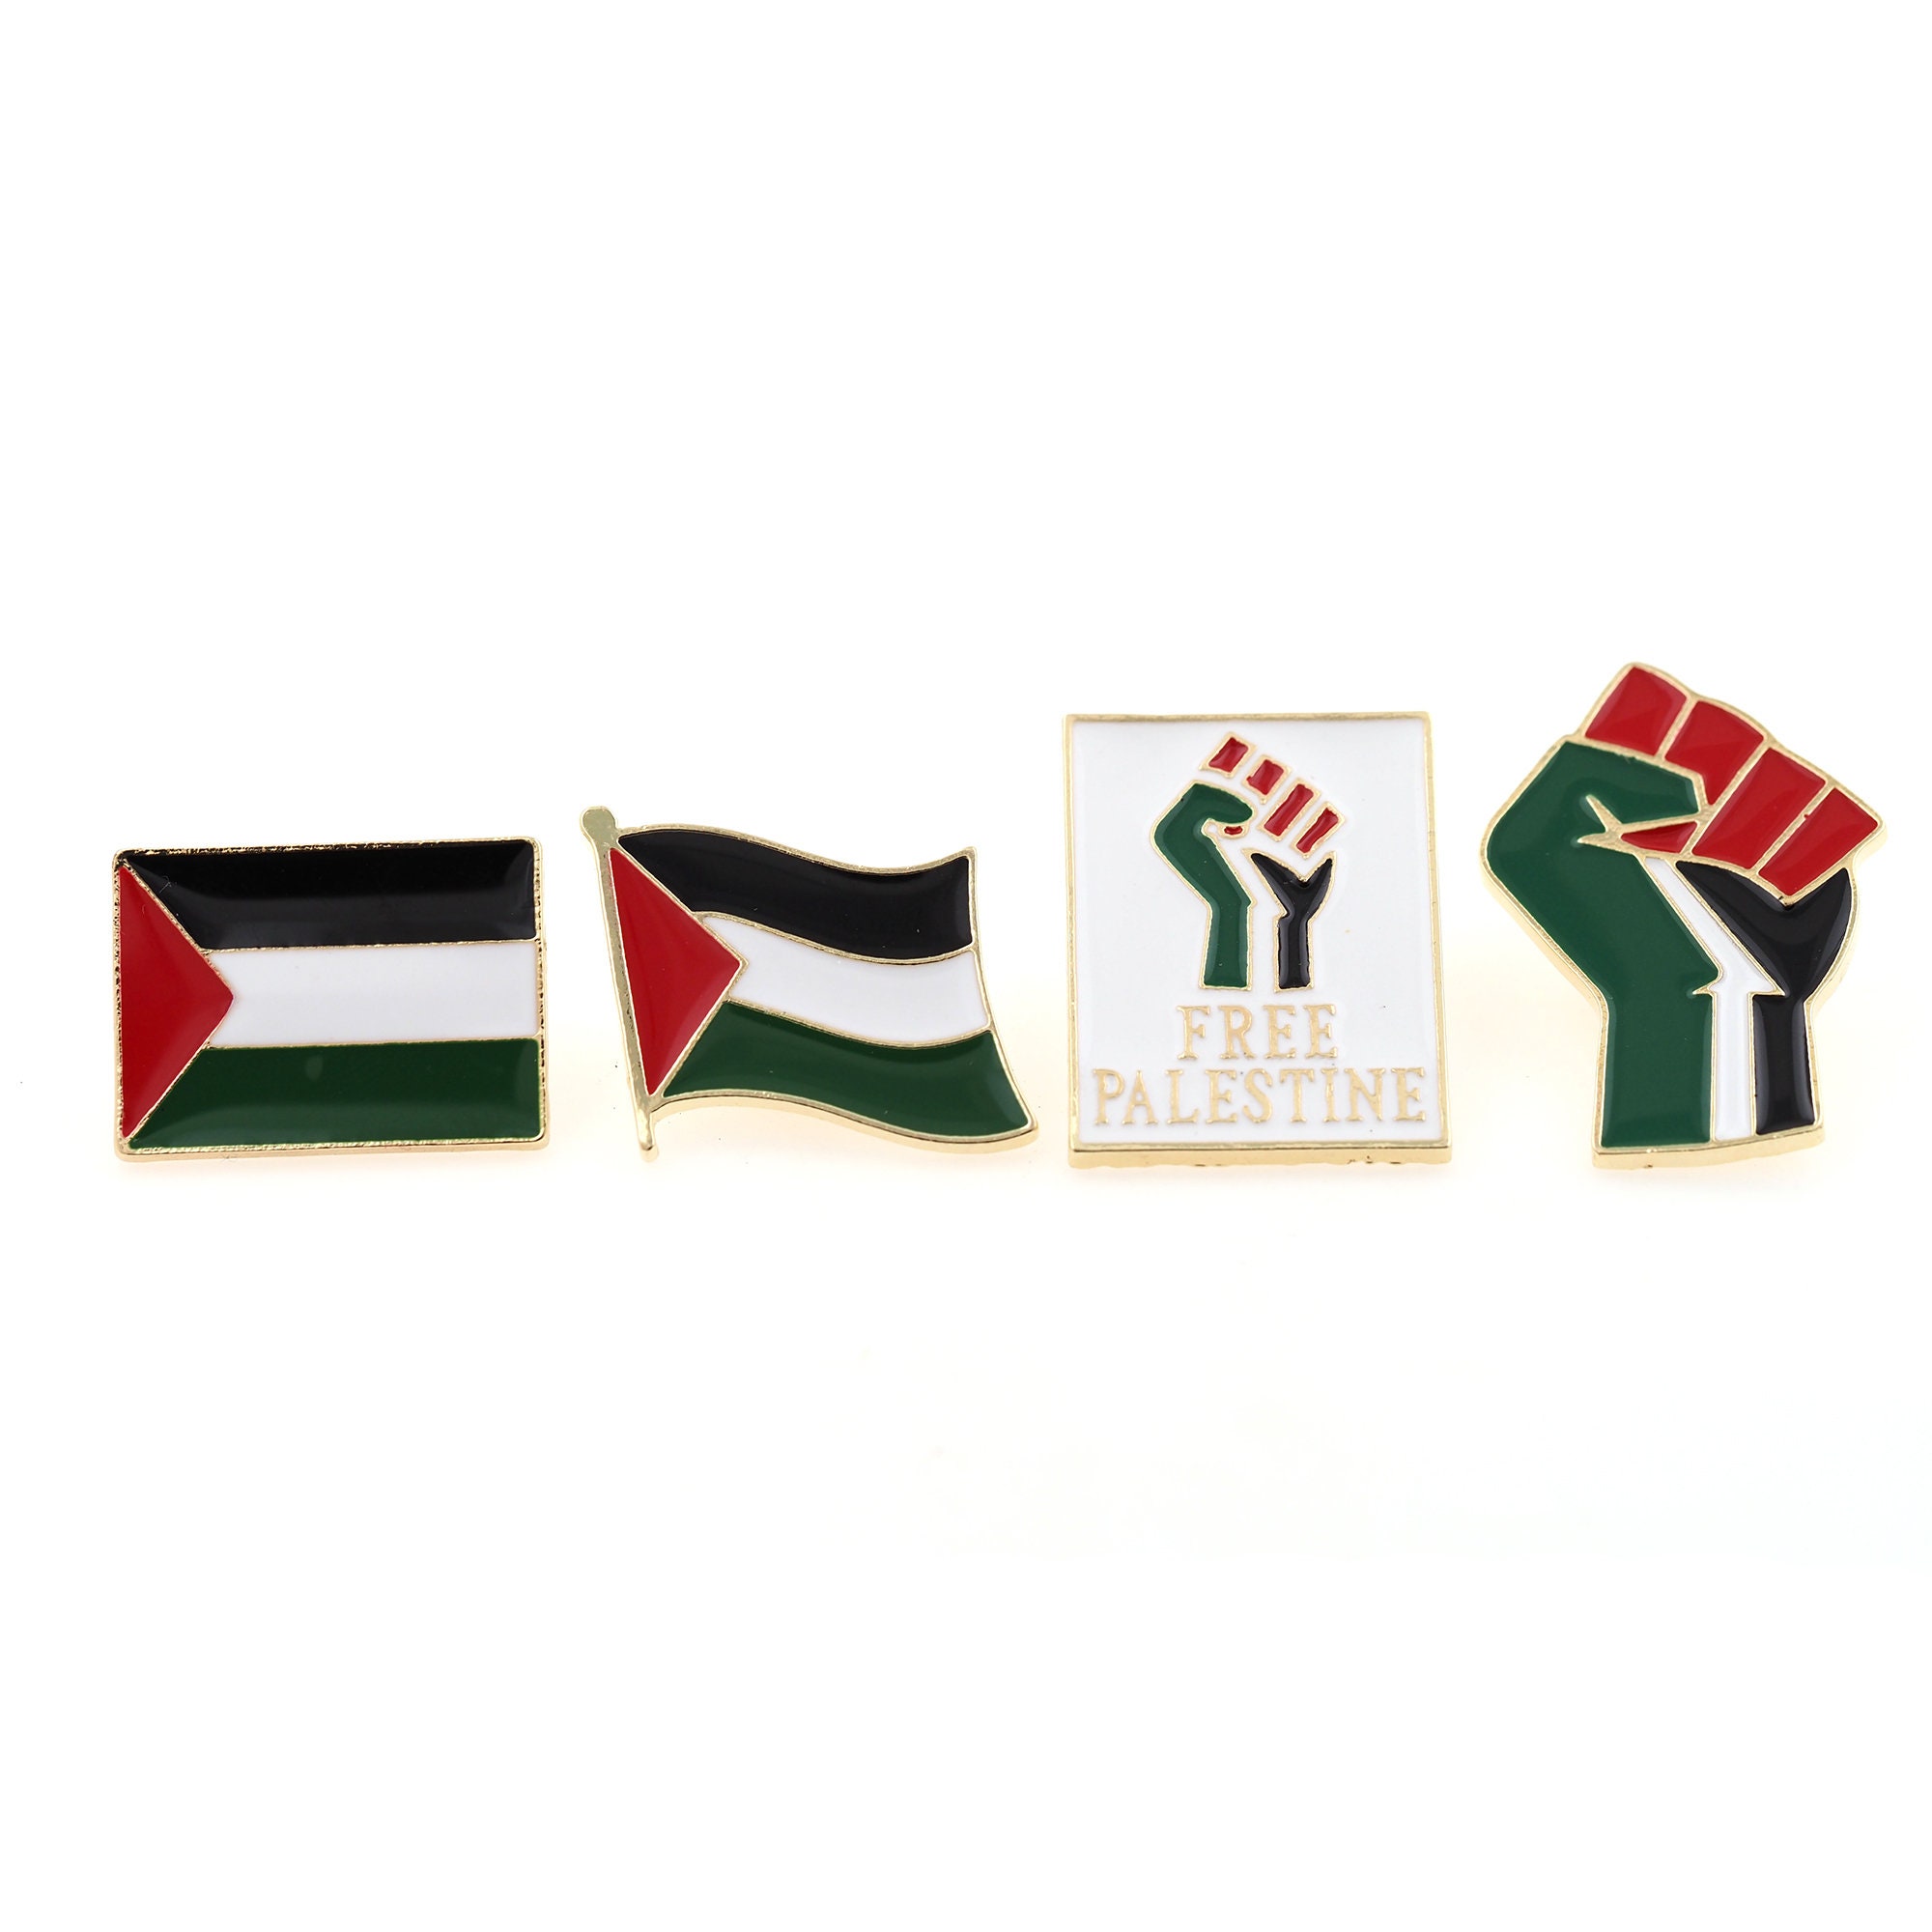 1-20 Palestine Palestinian Flag Pin Badge Lapel -- Free Palestine